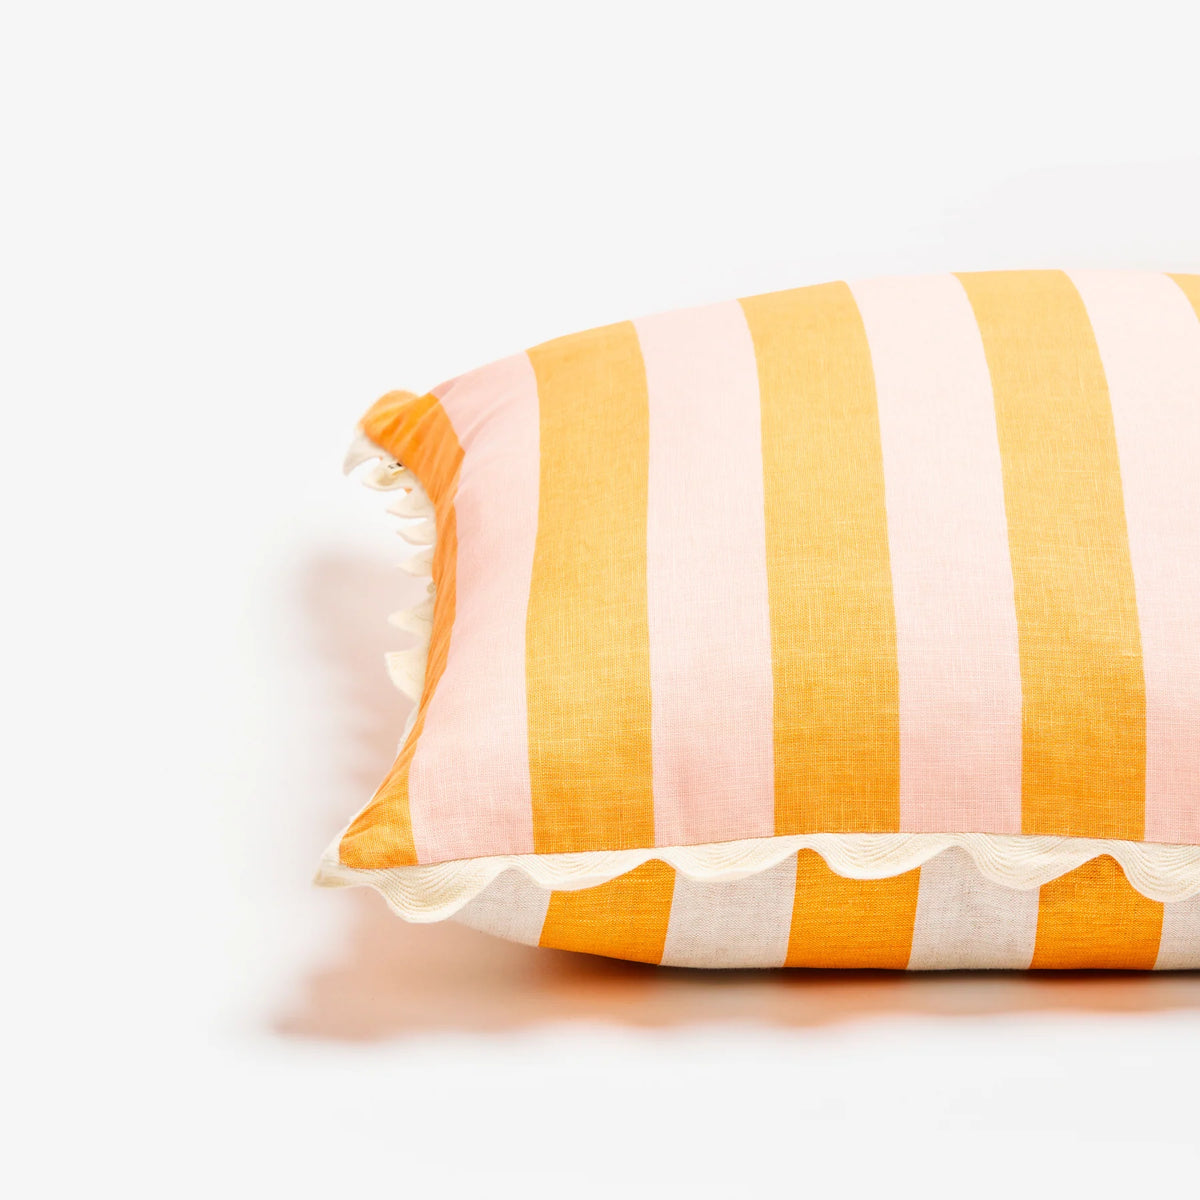 Bonnie and Neil Bold Stripe Orange Pink Cushion - FC385